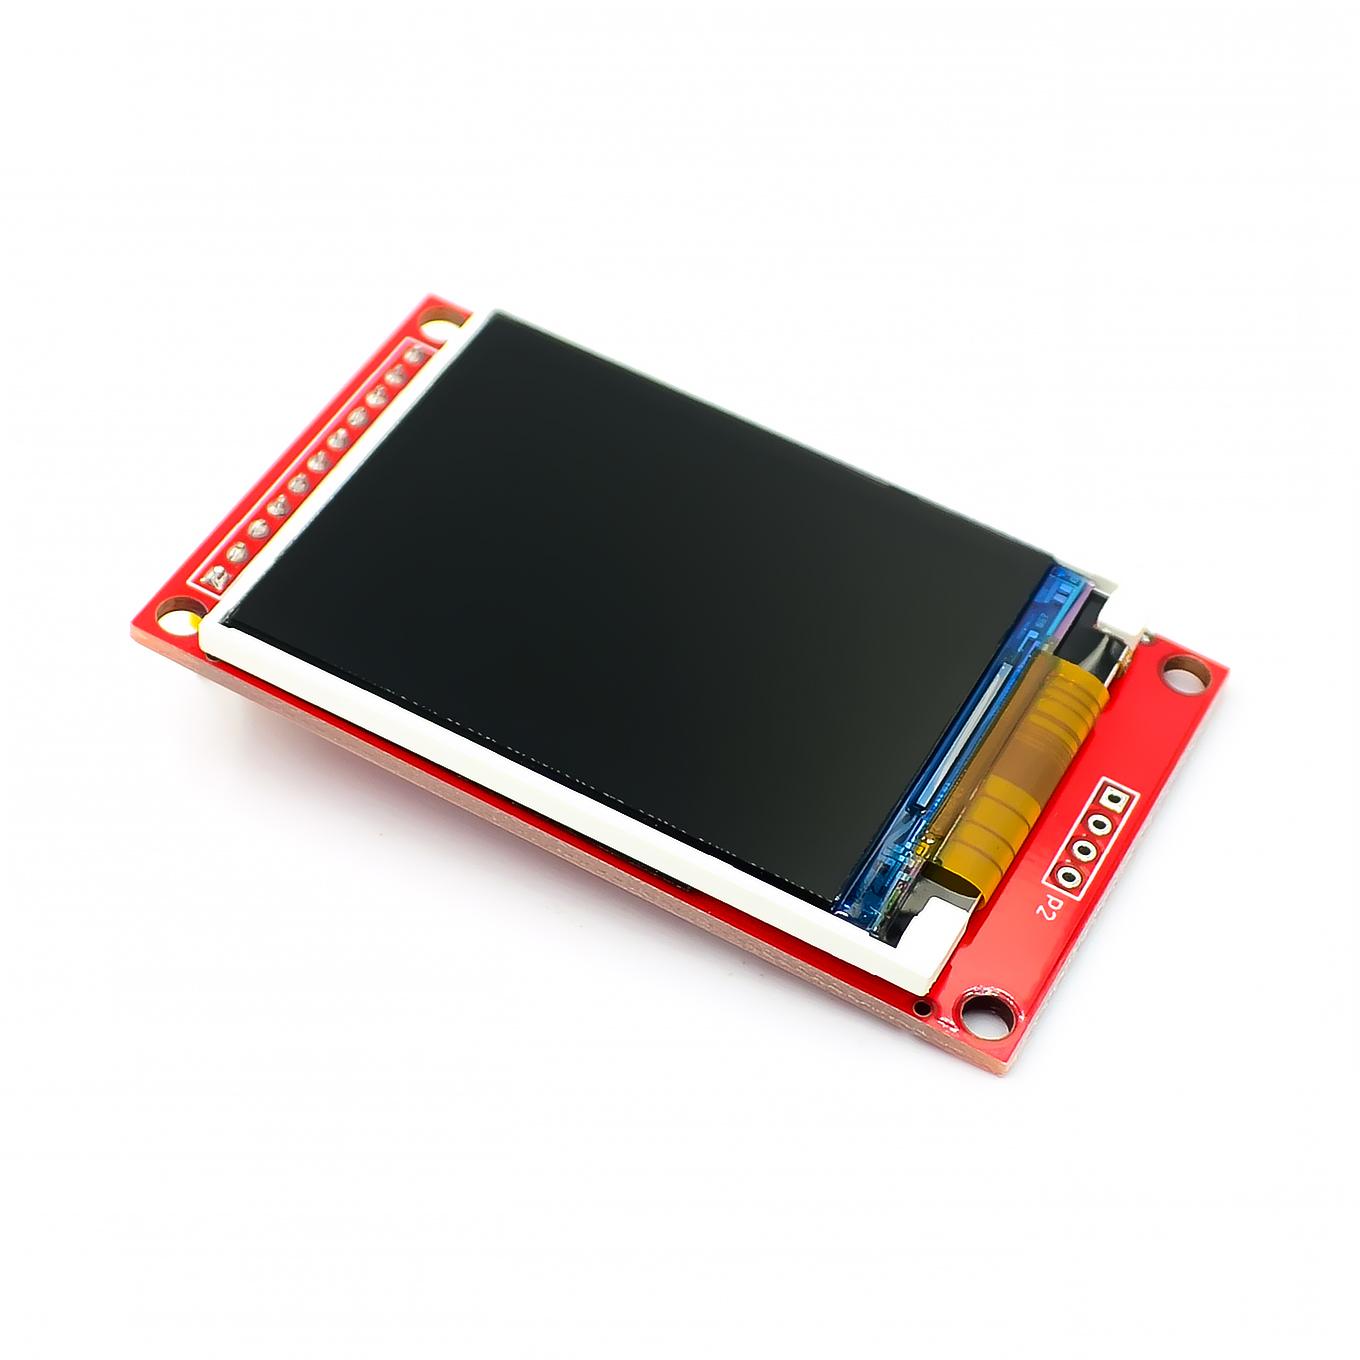 2.0 inch ILI9225 TFT LCD module SPI serial interface module 170 * 220 Minimum occupancy 4 IO